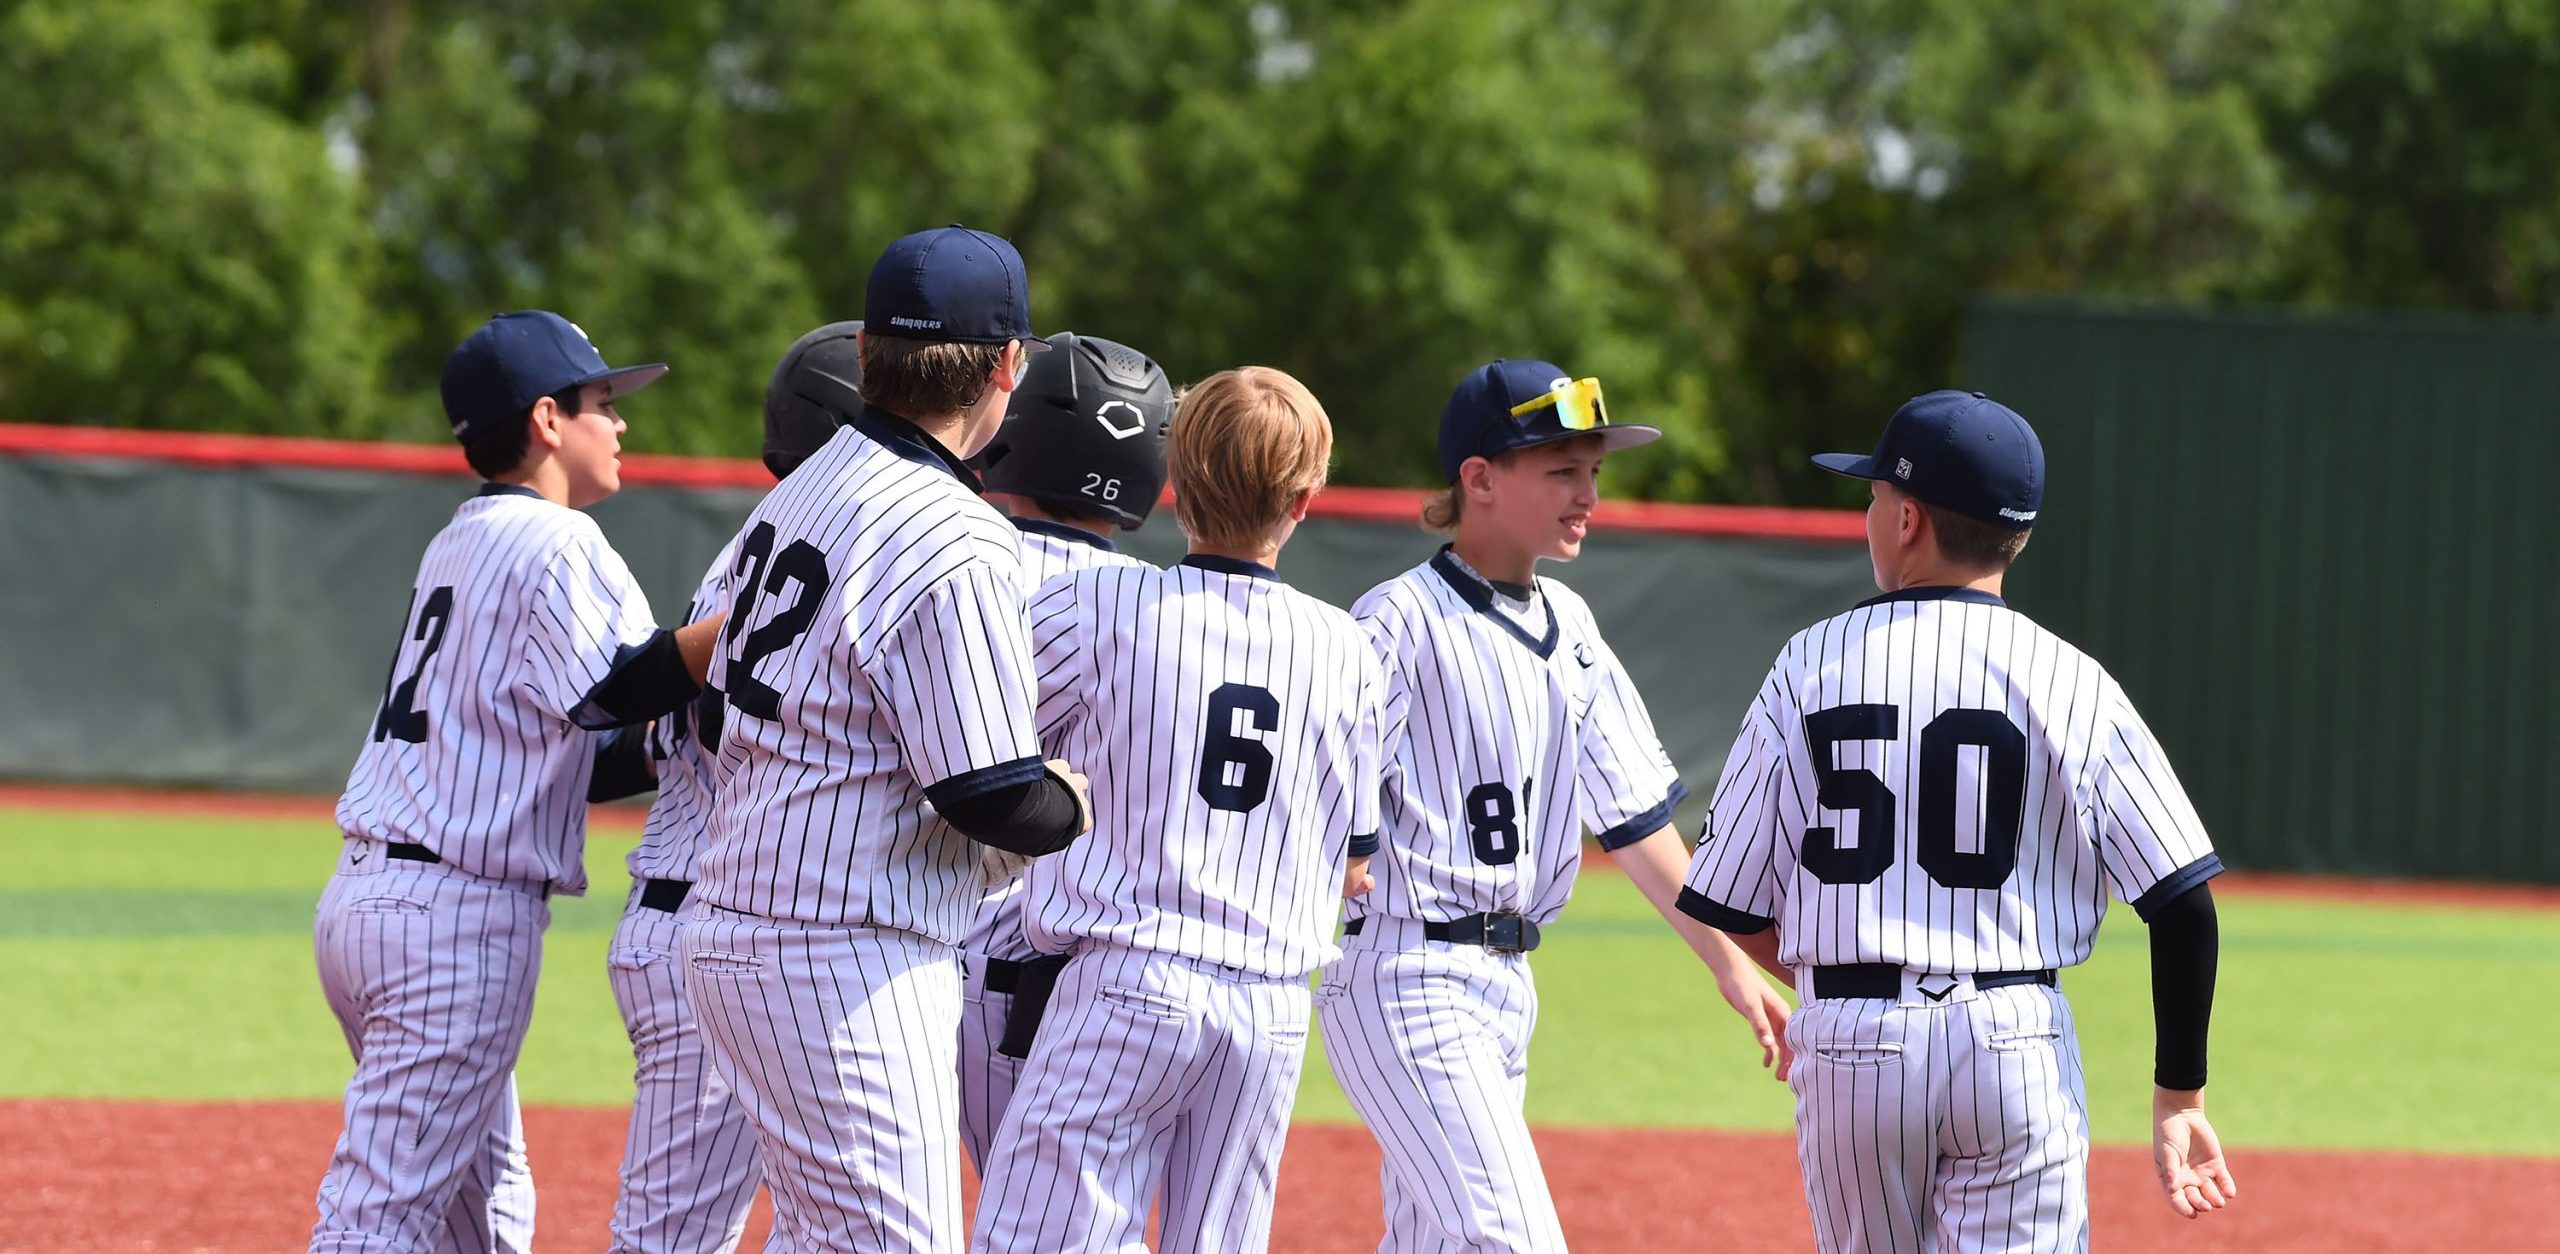 Youth baseball team huddles together